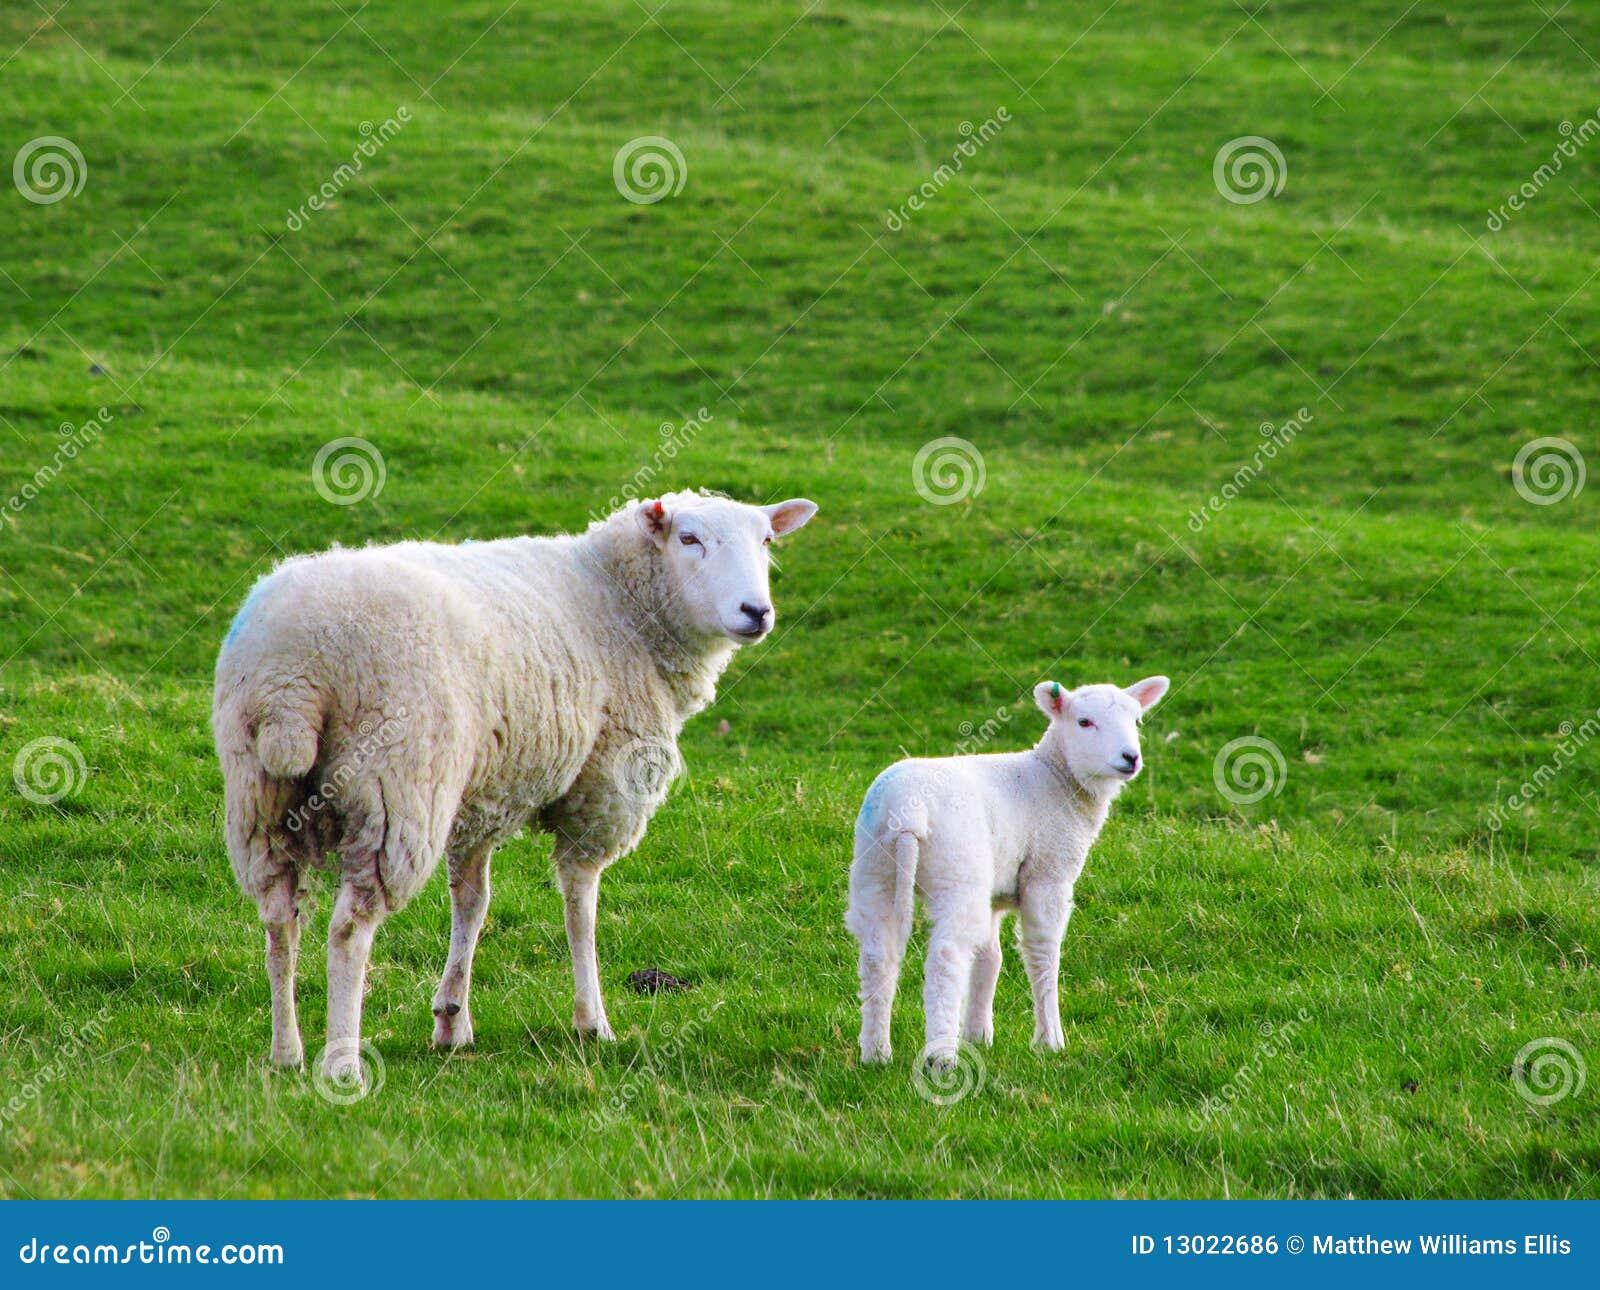 mother sheep and baby lamb